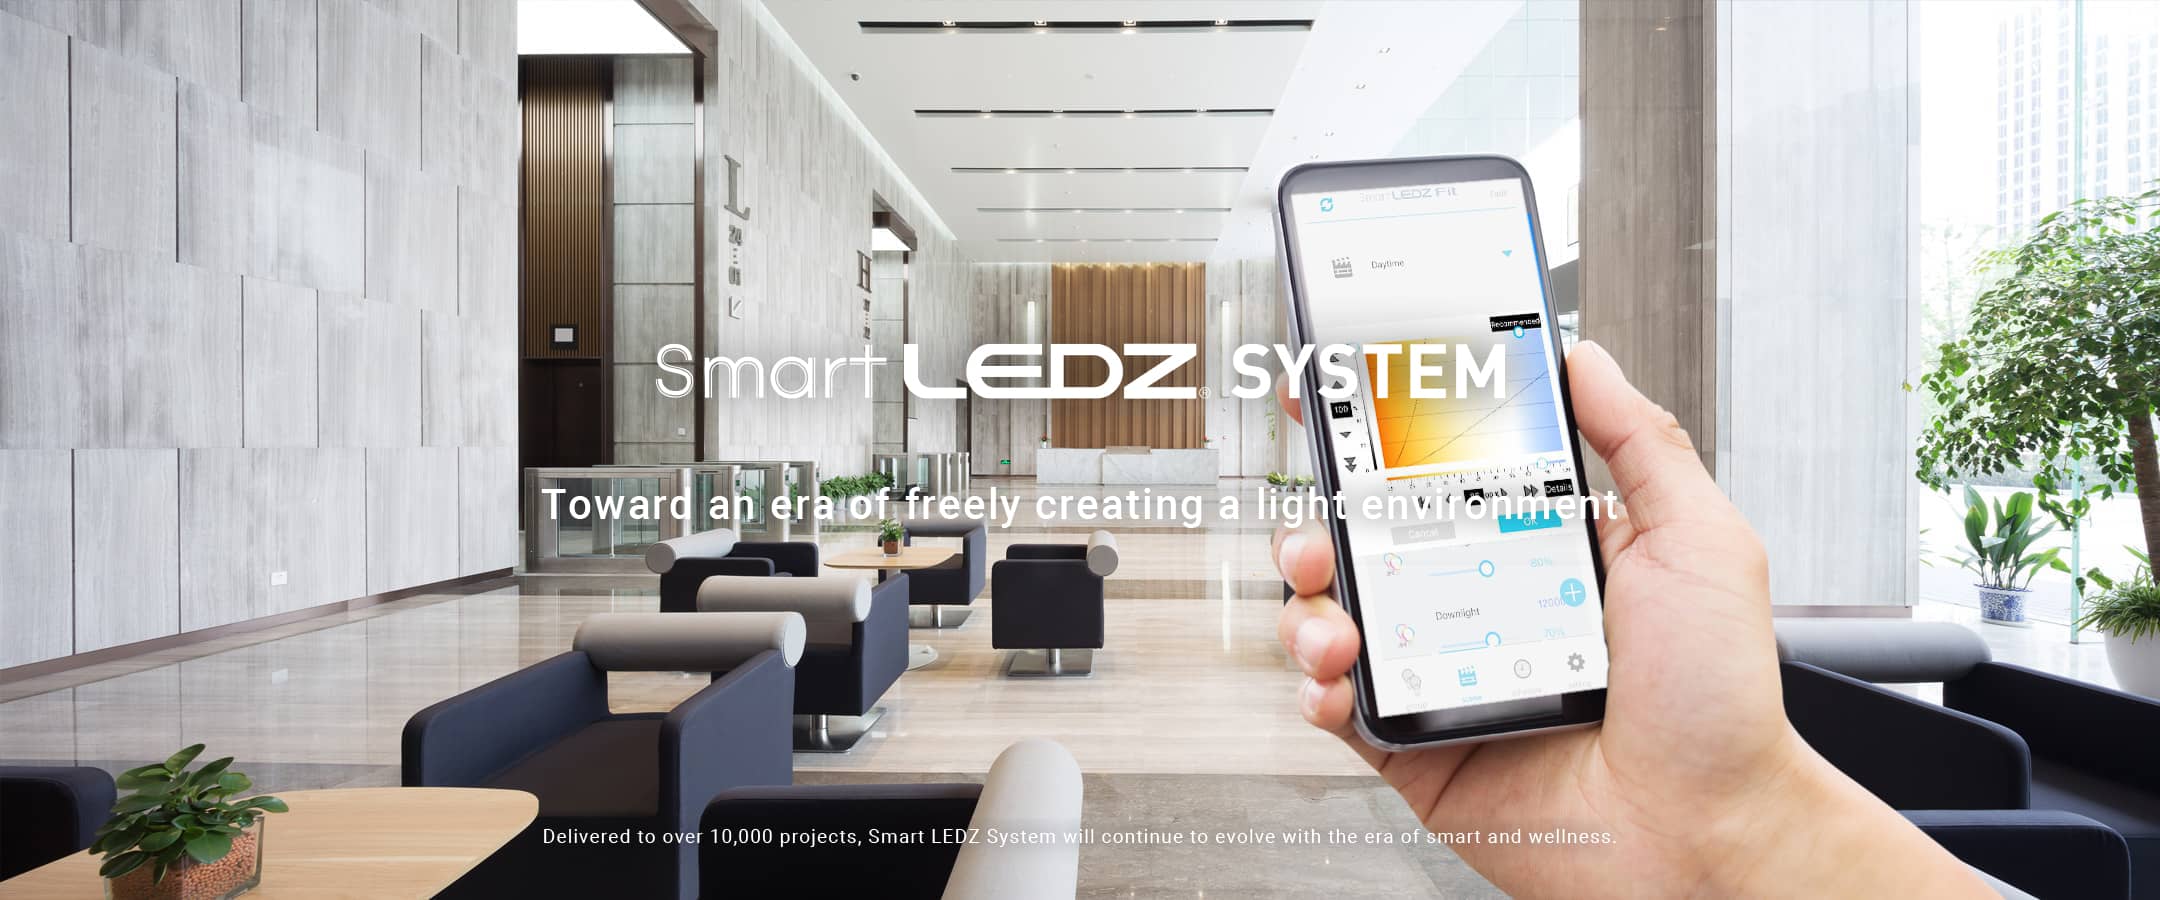 Smart LEDZ_top